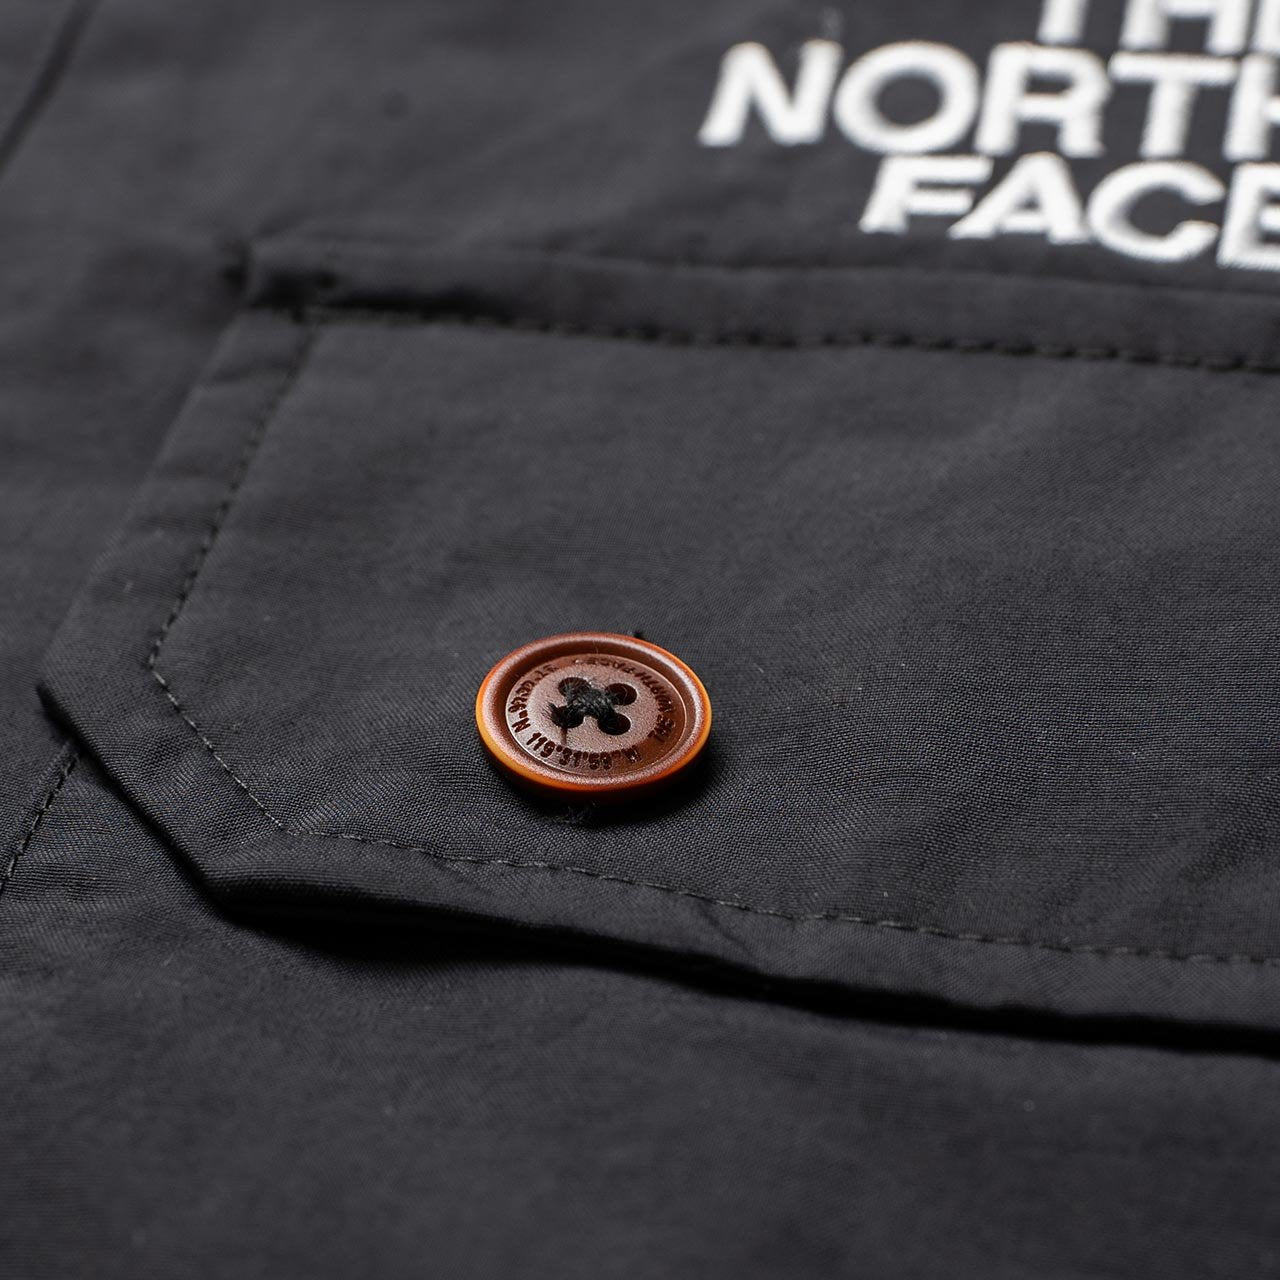 the north face black series kk coach shirt (black) - t93vq8jk3 - a.plus - Image - 4